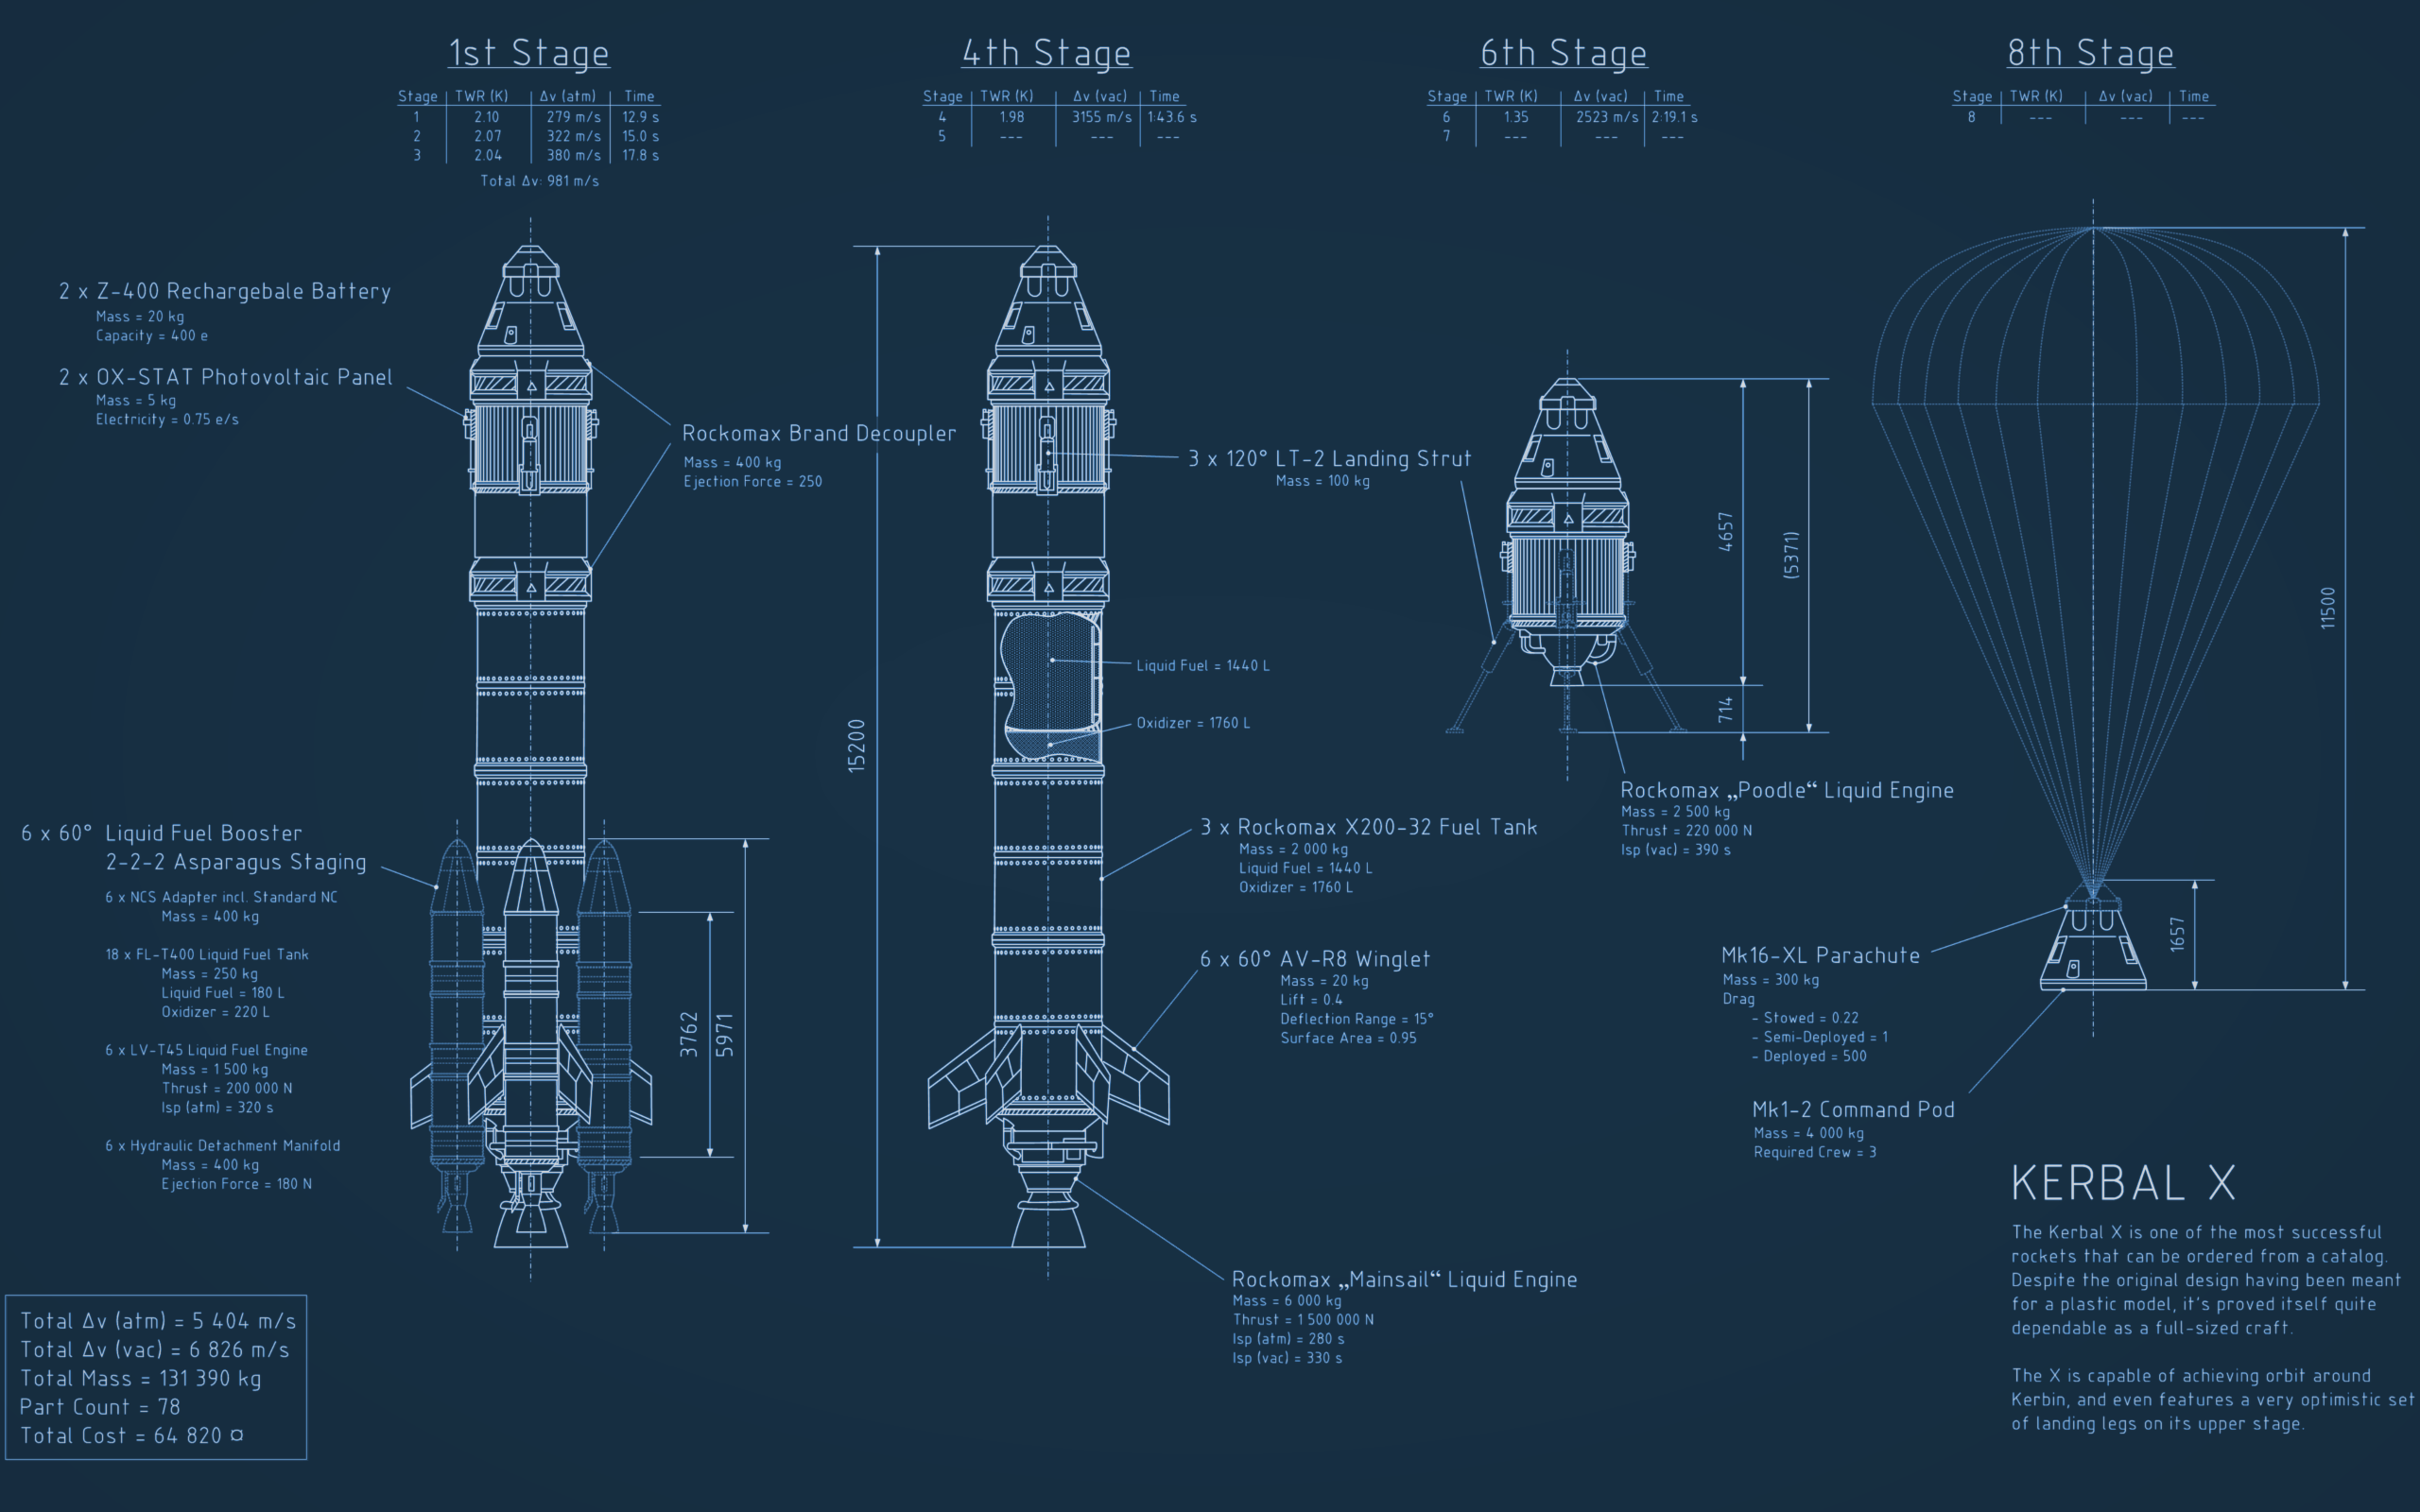 Kerbal Space Program Wallpaper 8vxc5jd 4usky